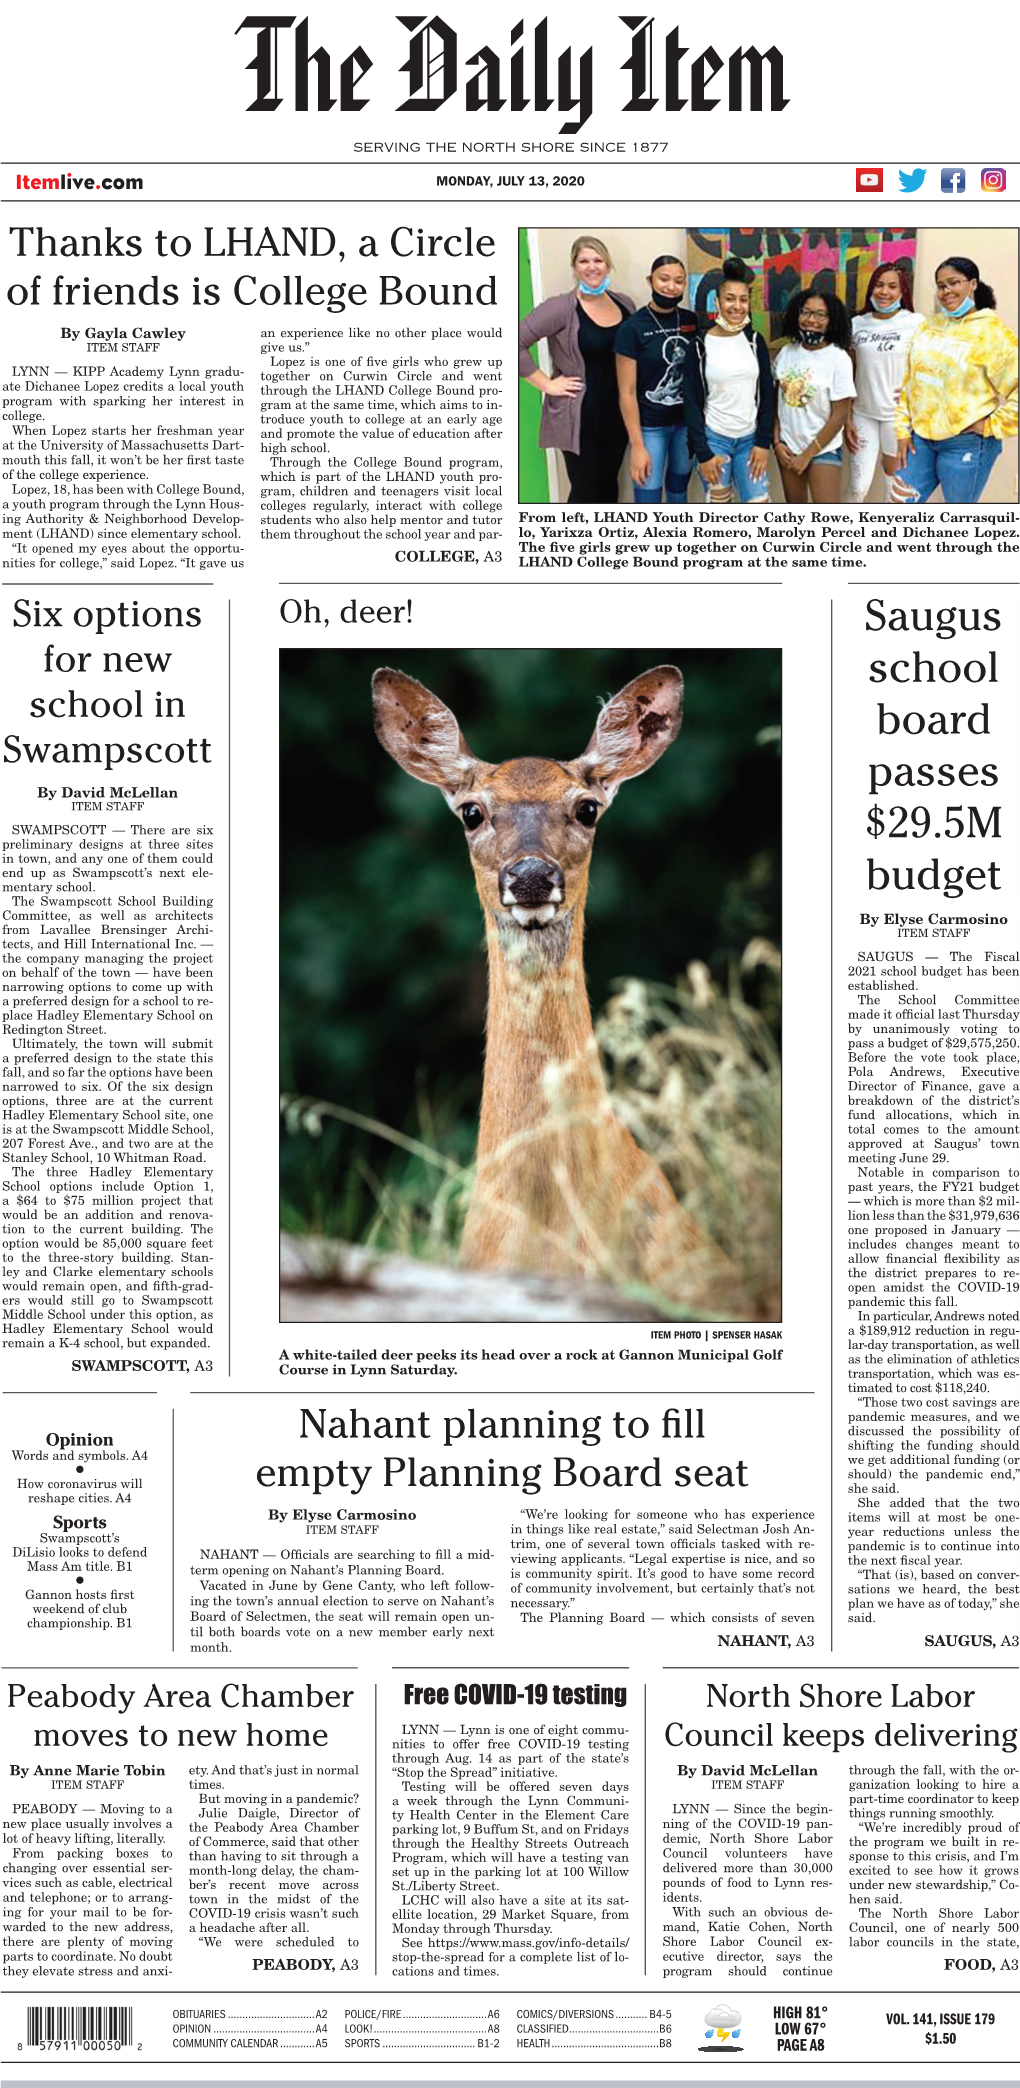 Saugus School Board Passes $29.5M Budget